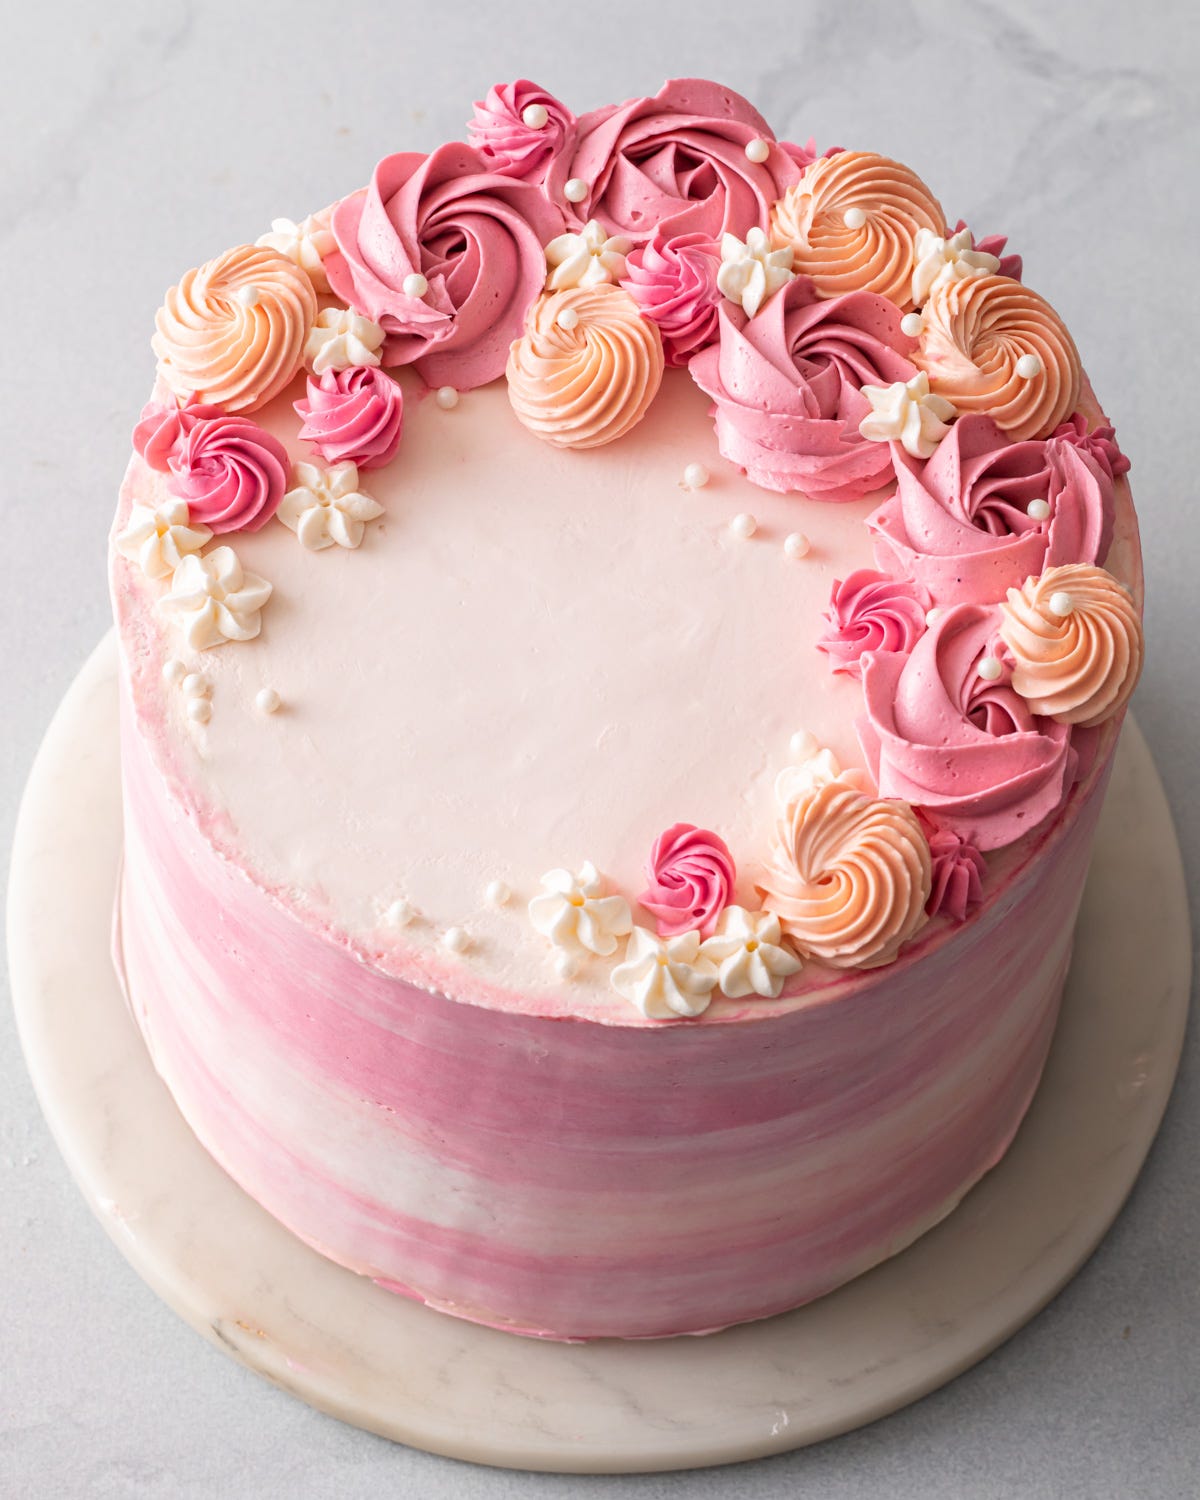 15+ Simple Pink Cake Design